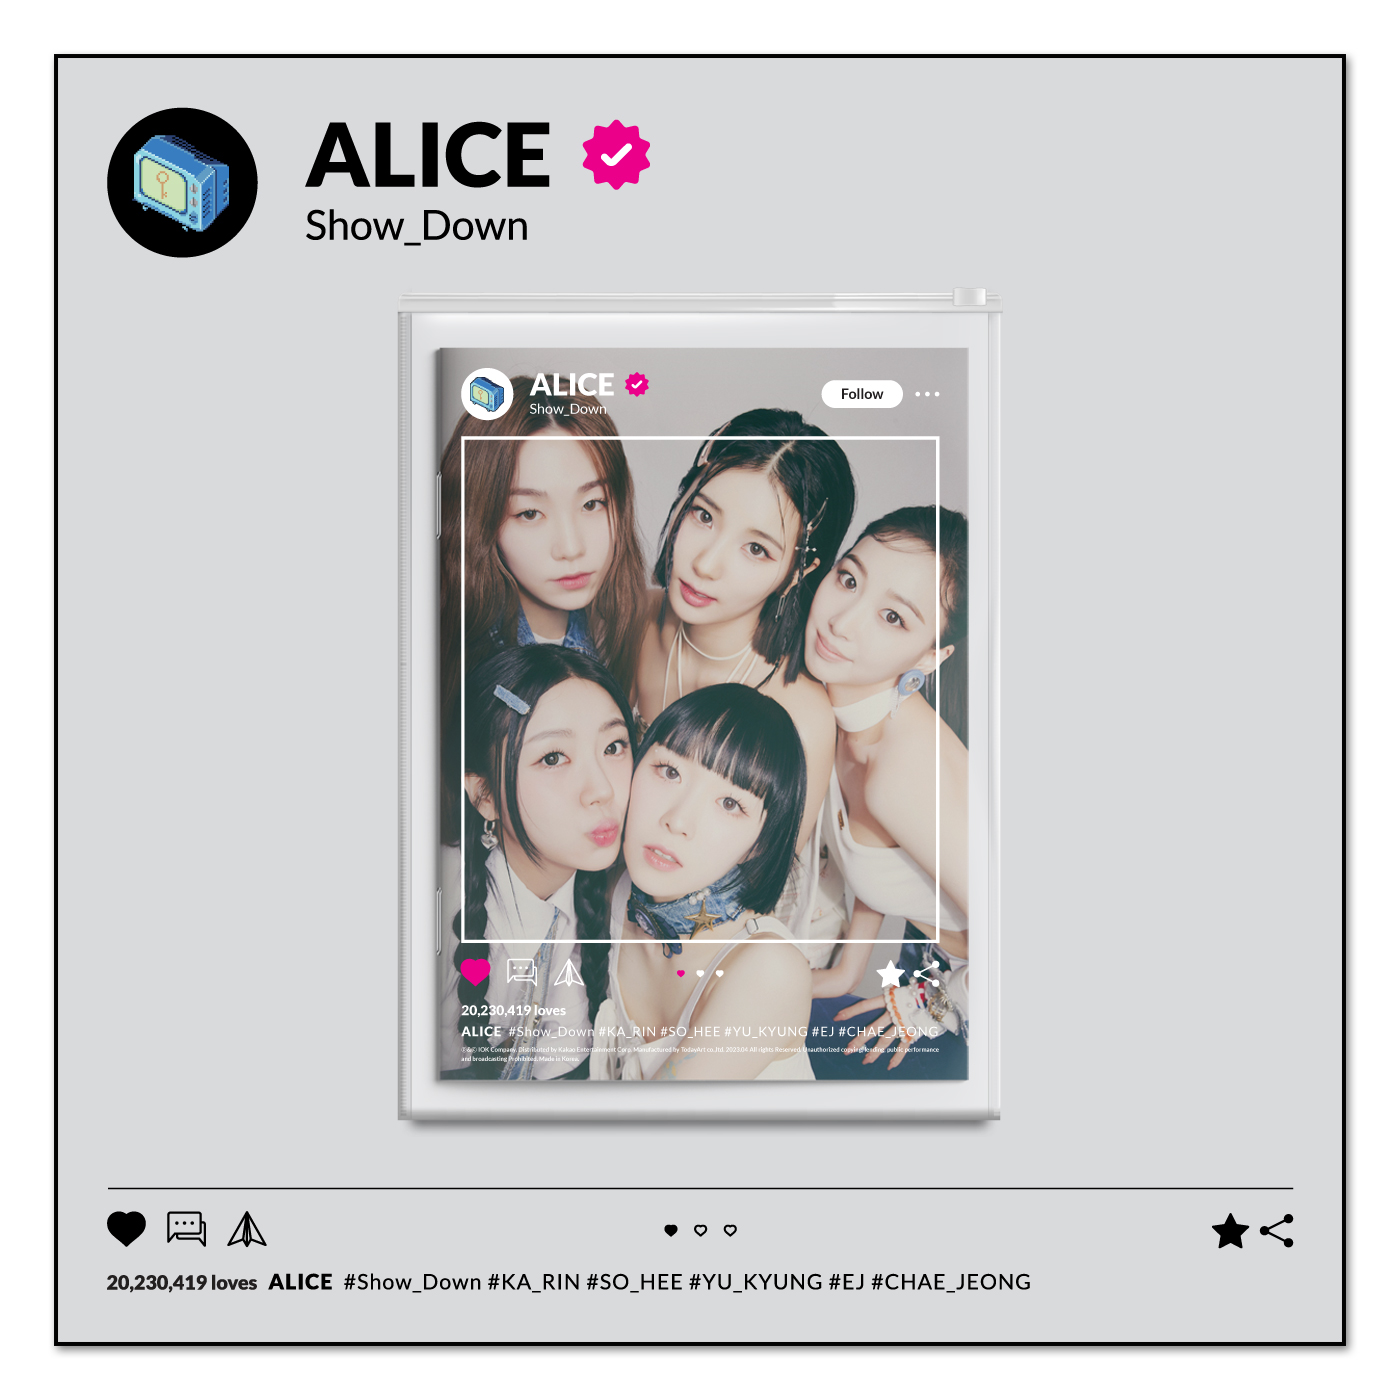 [全款 裸专] ALICE - 单曲2辑 [SHOW DOWN] _Kim_SOHEE 中文首站